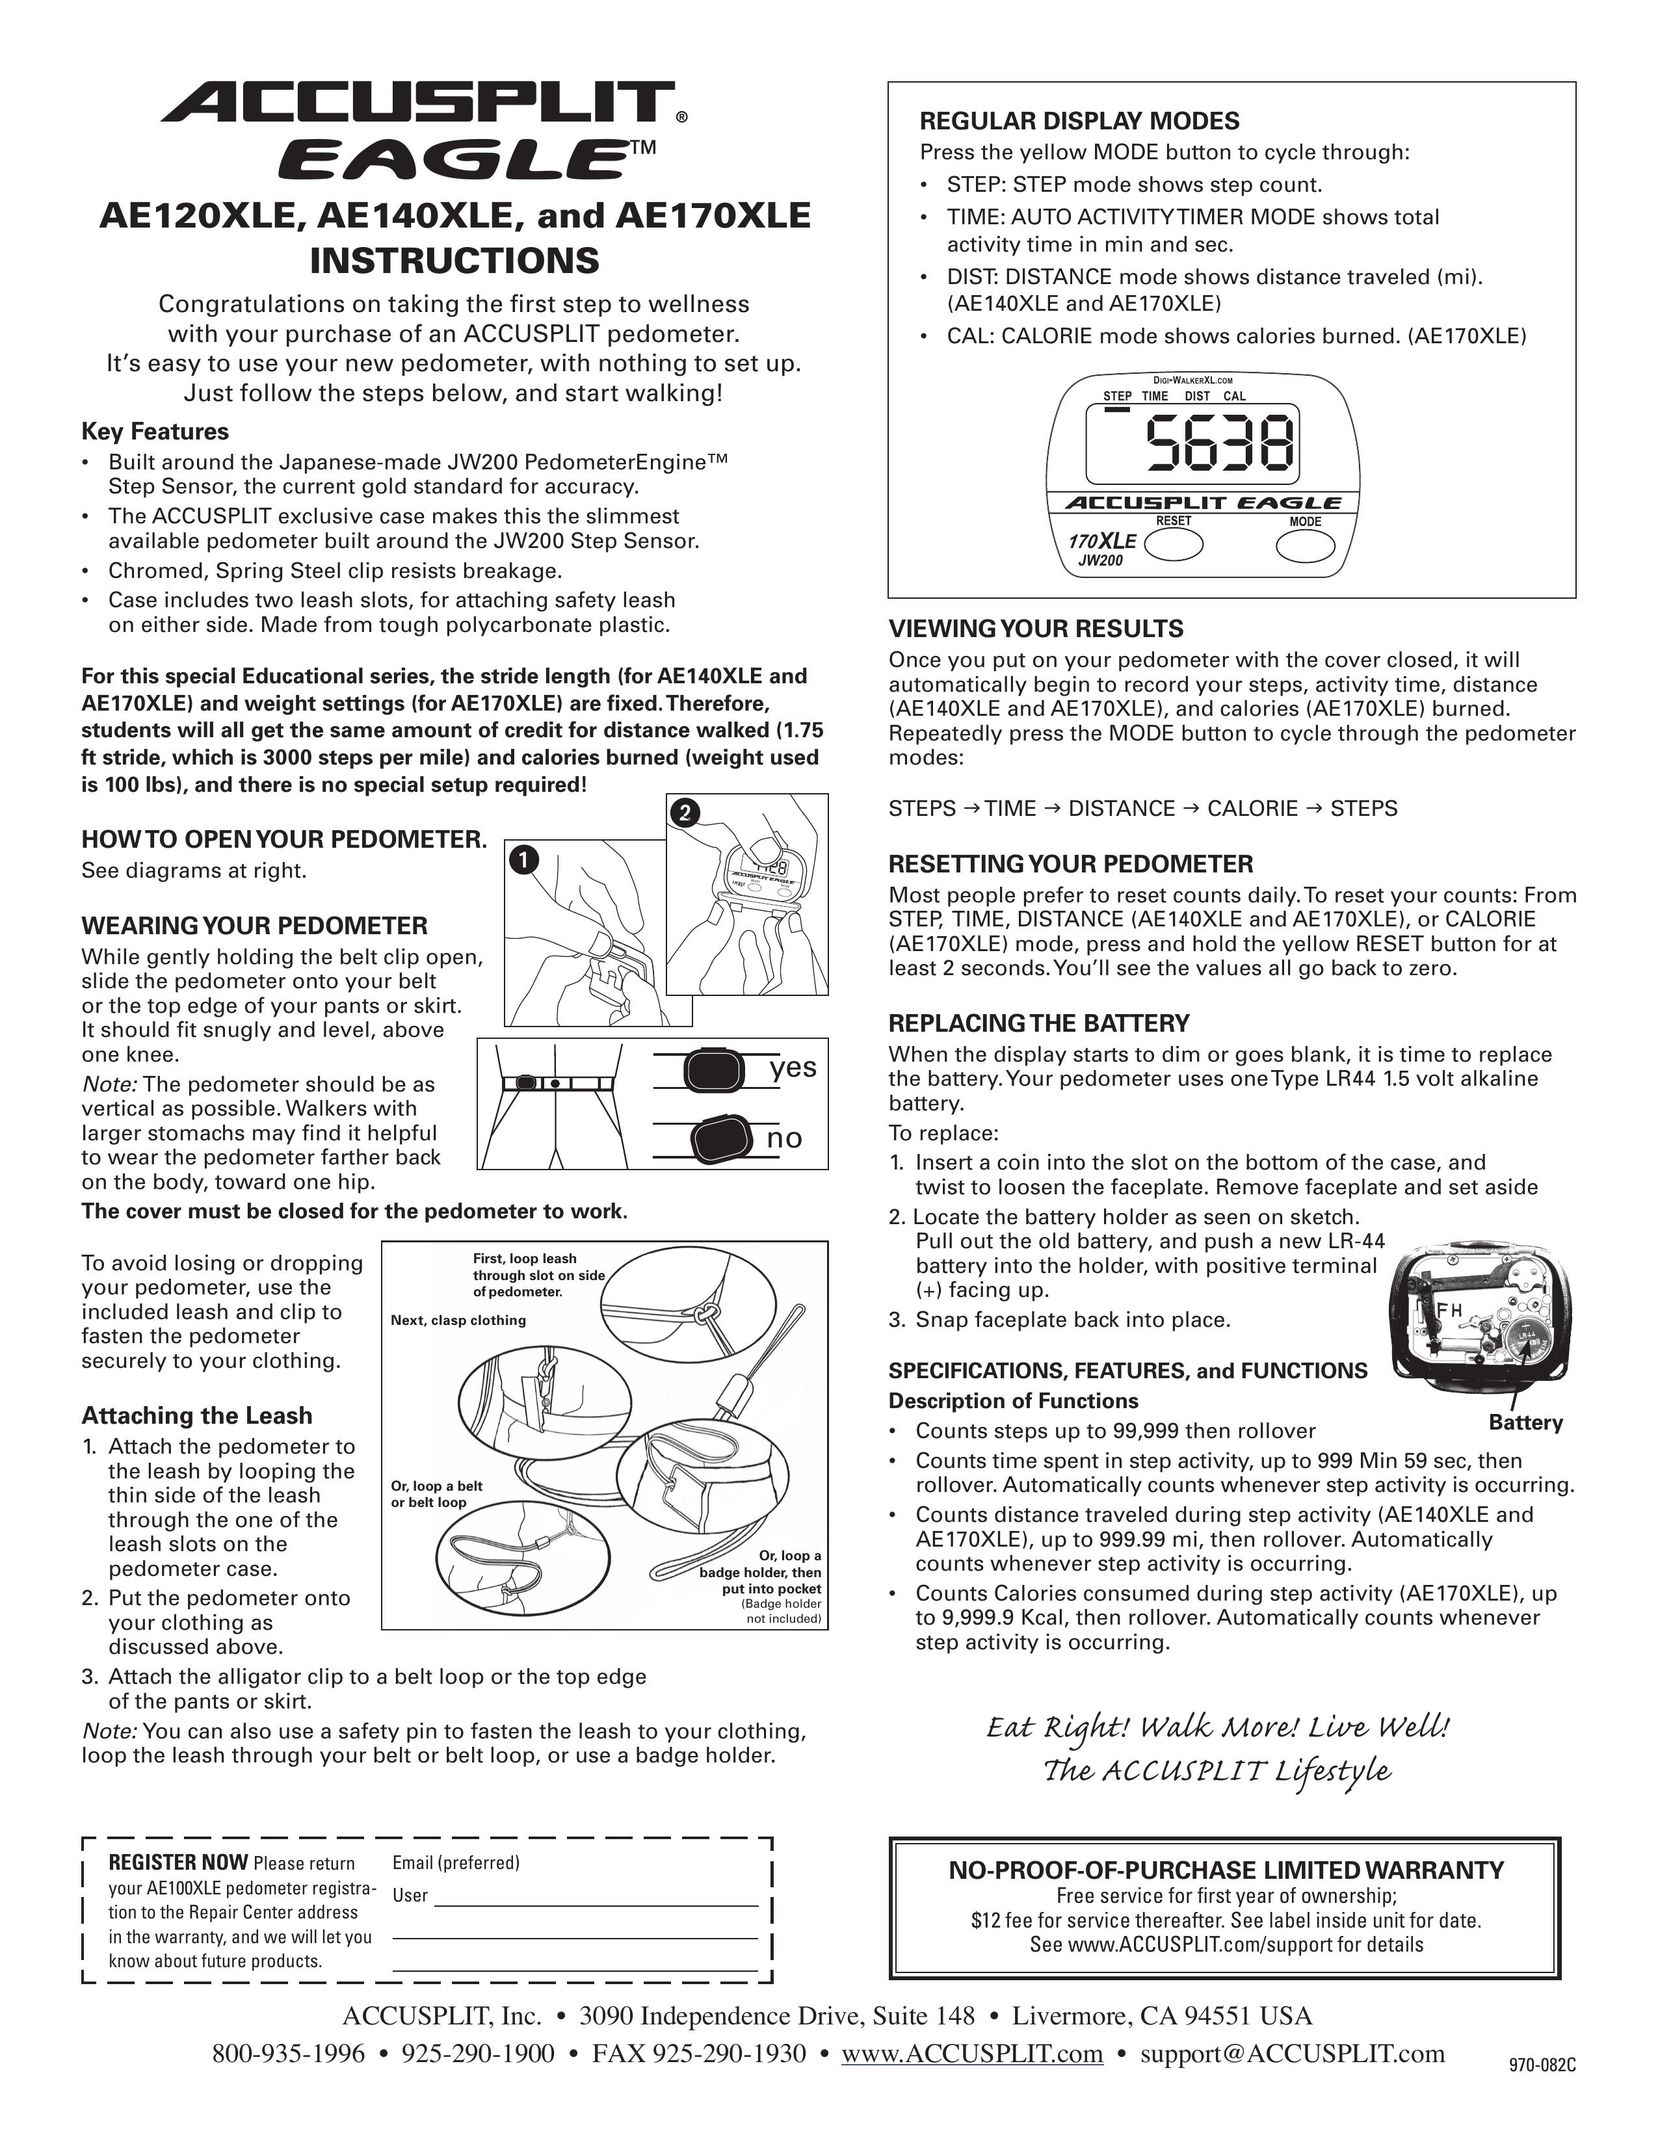 Accusplit AE120XLE Fitness Electronics User Manual